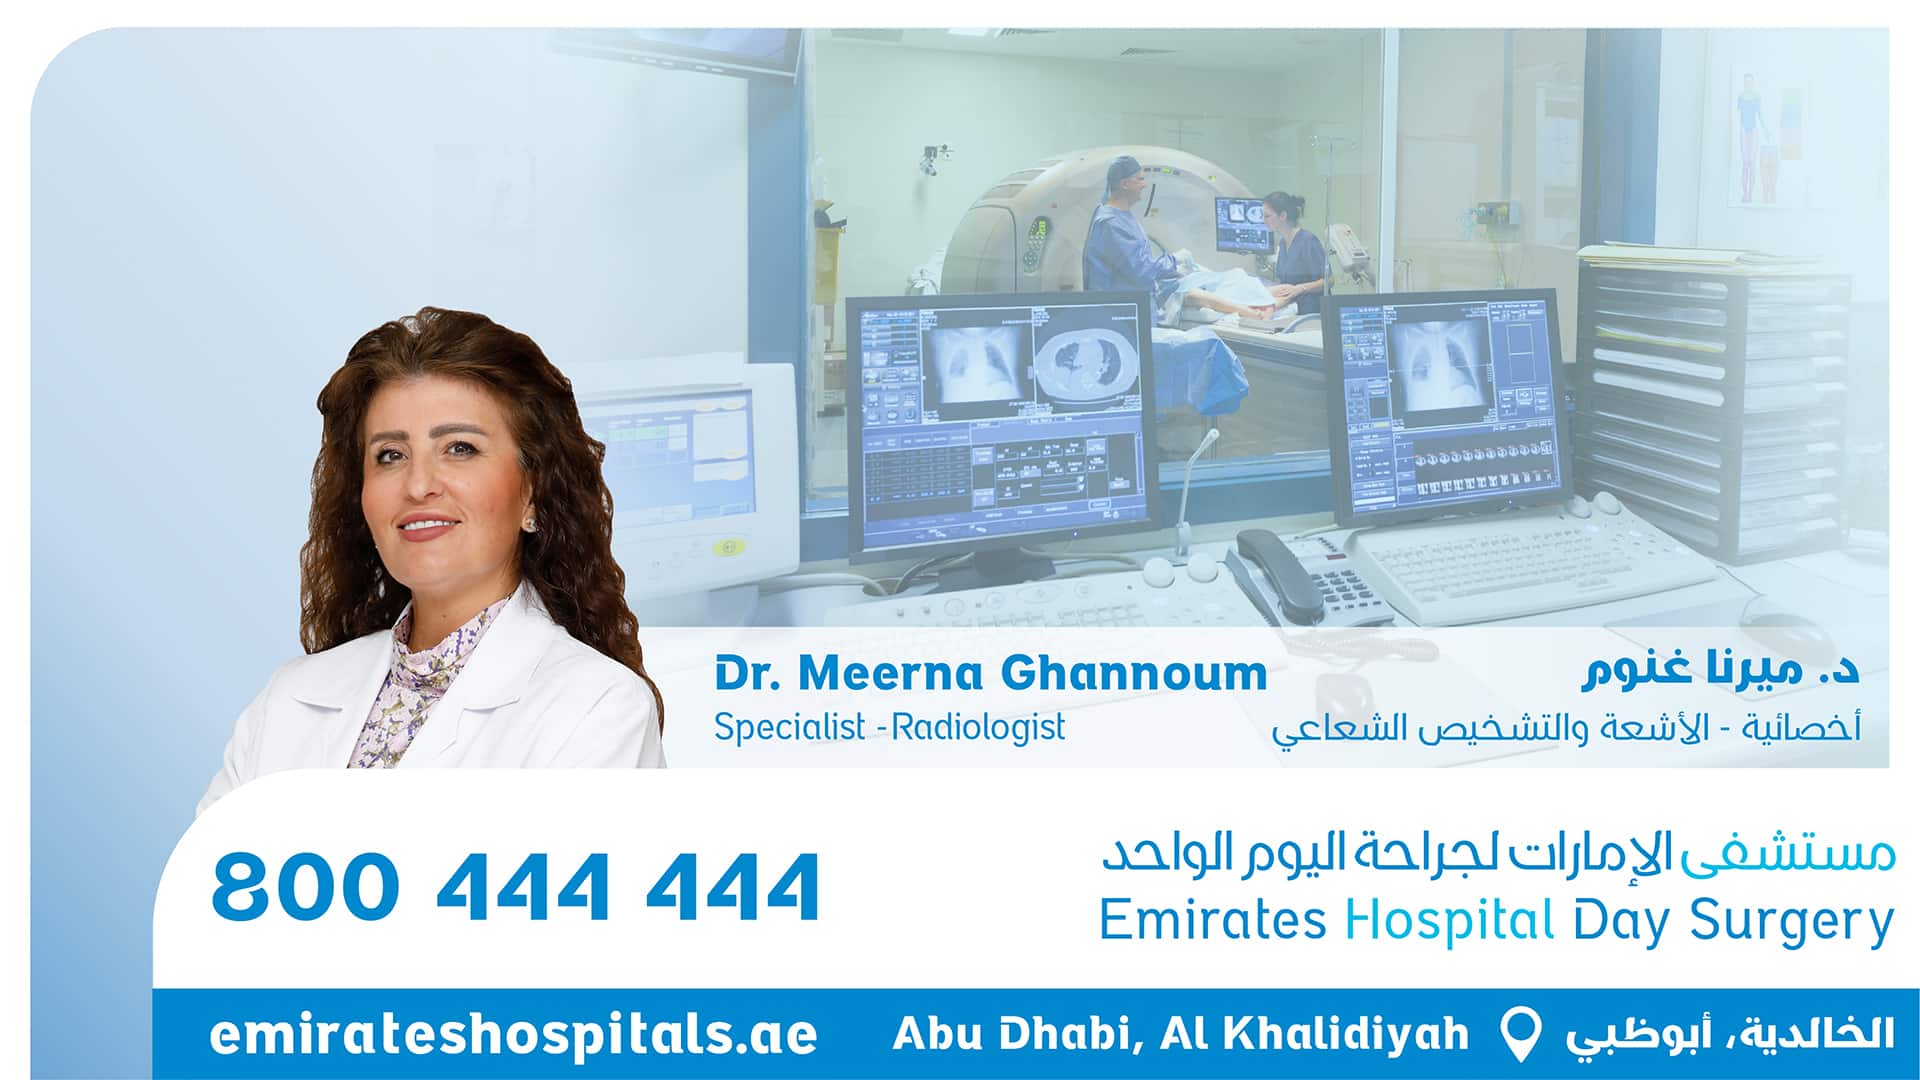 Dr. Meerna Elias Ghannoum - Specialist Radiologist